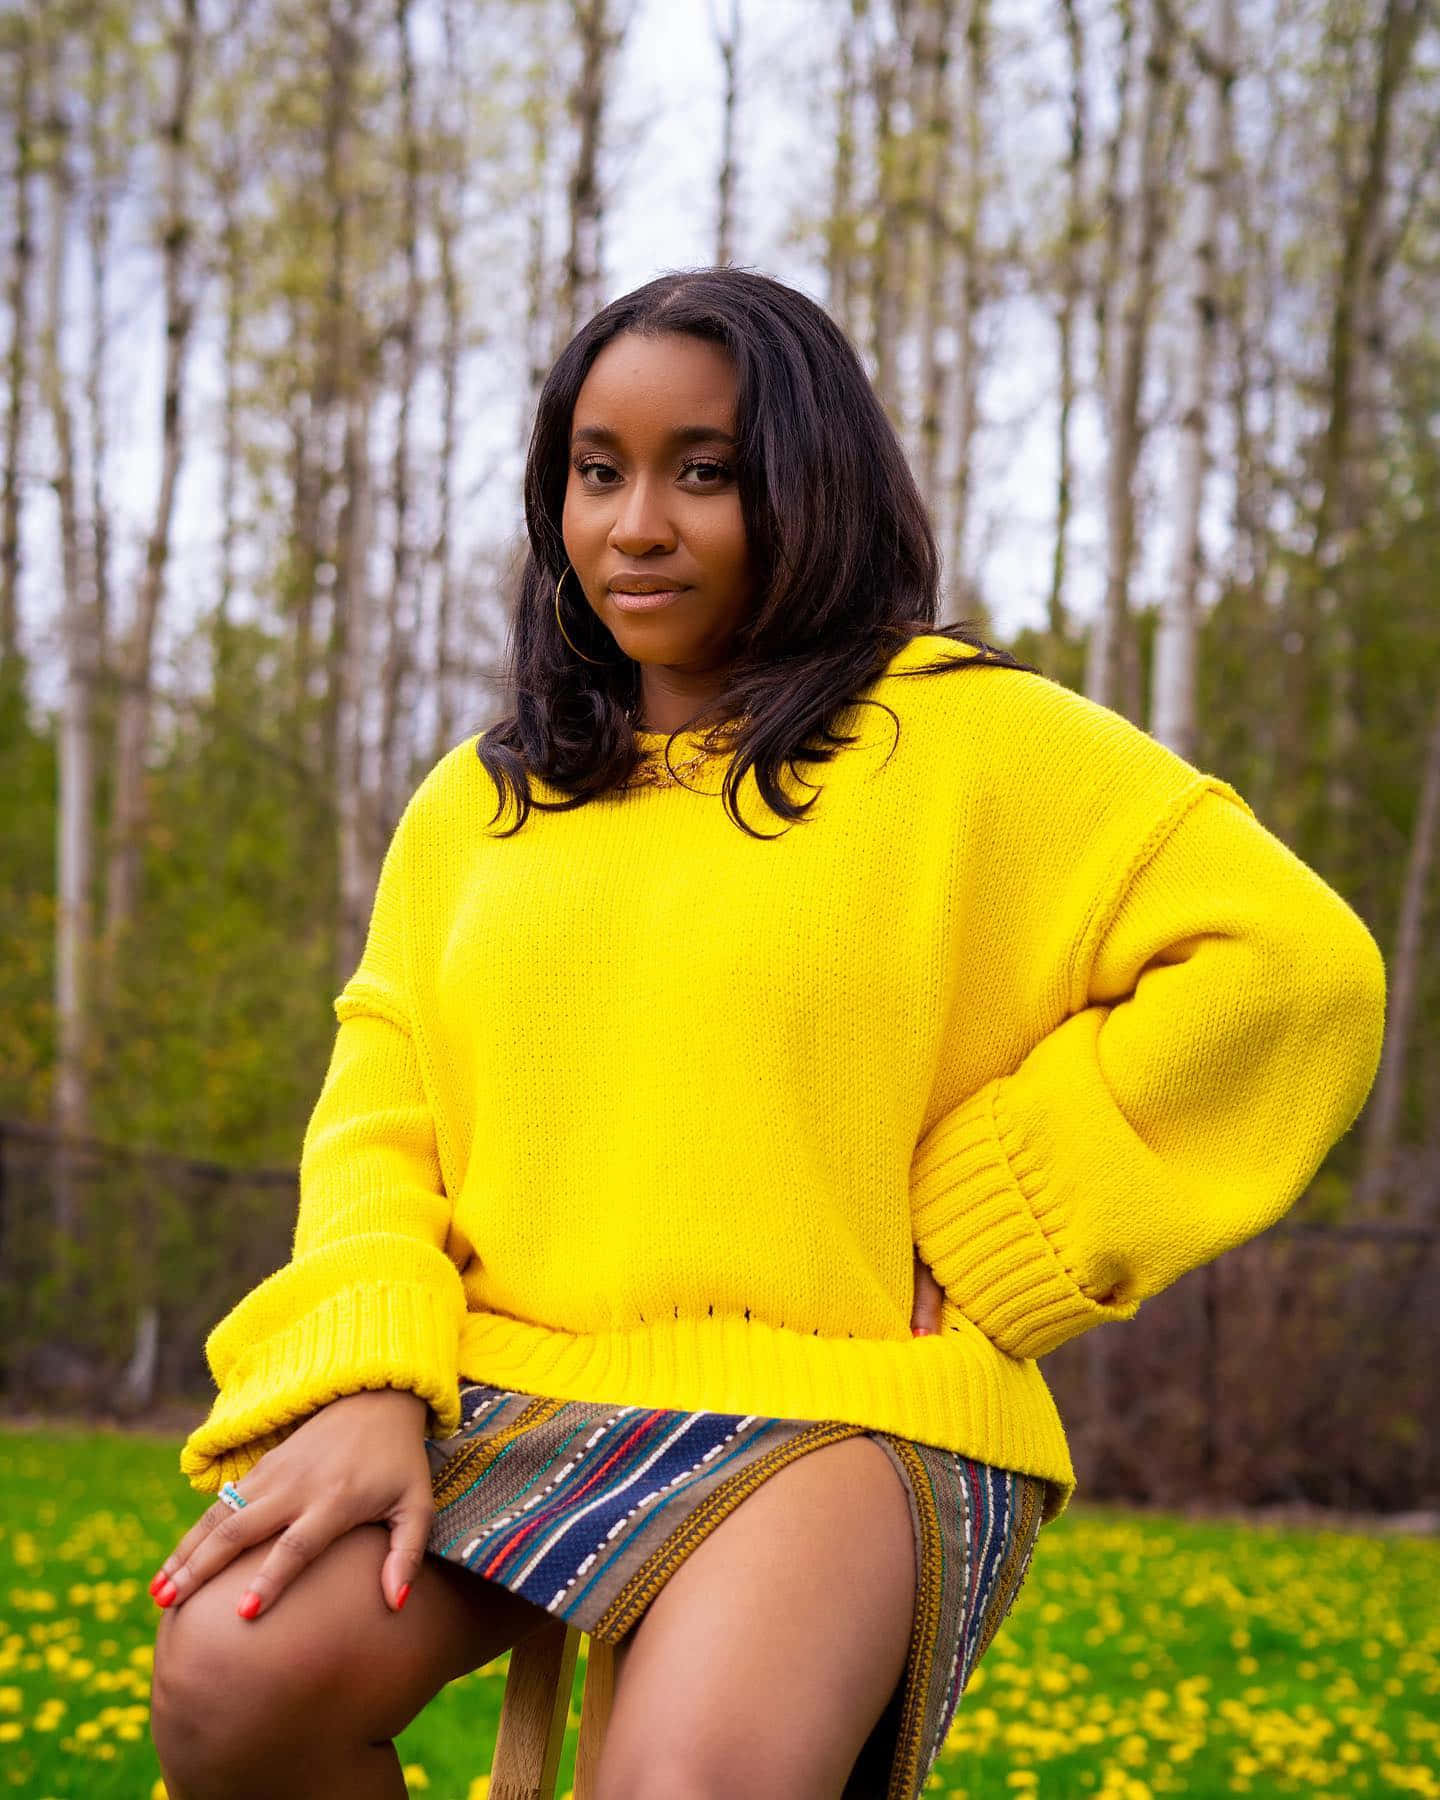 Womanin Yellow Sweater Outdoors Wallpaper